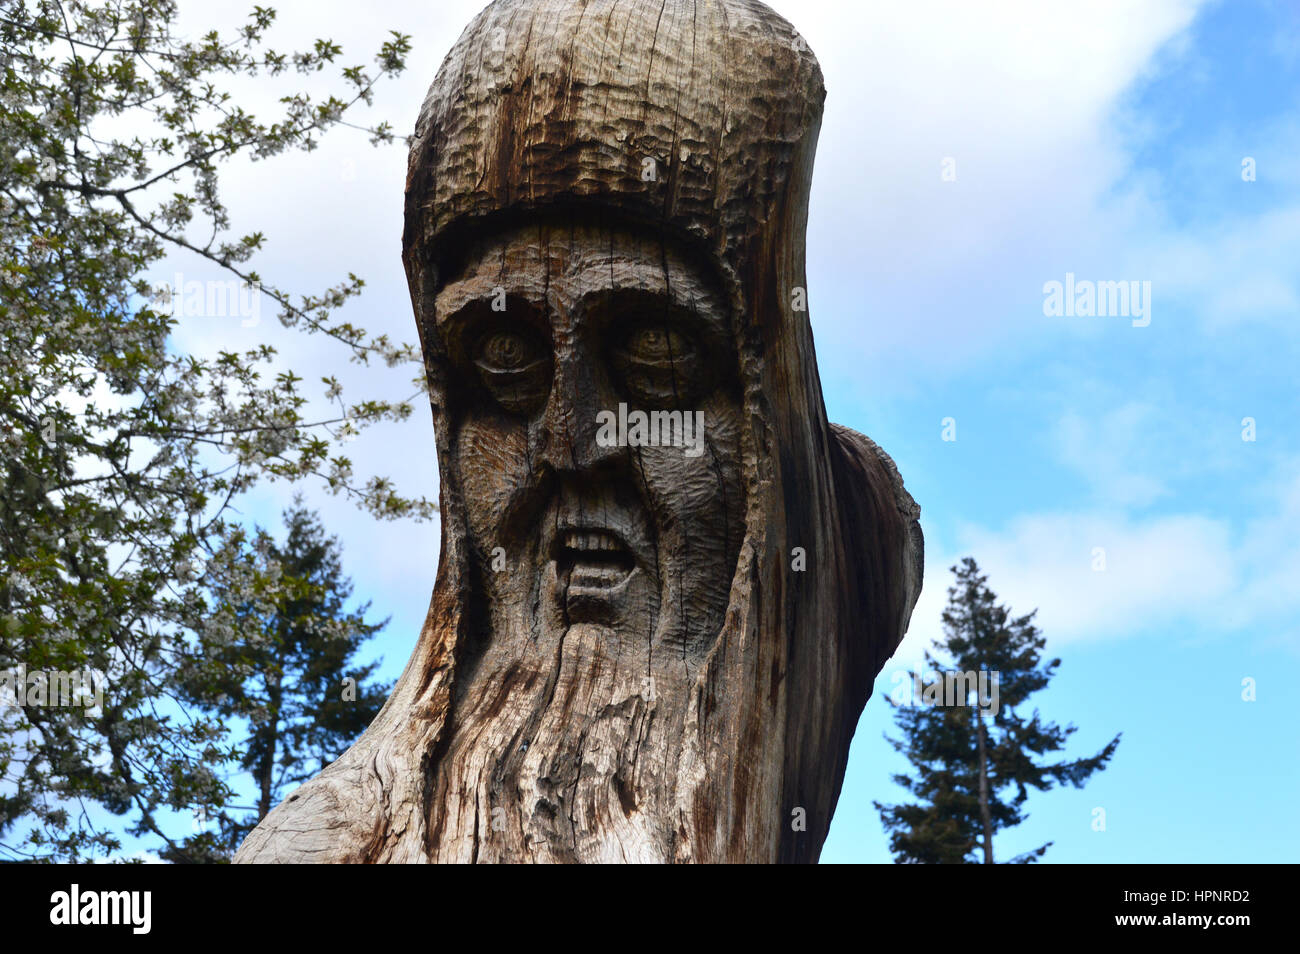 Wooden Tree Sculpture called The Onlooker part of the Frank Bruce Sculpture Trail, Inshriach Forest, Feshiebridge,Cairngorms National Park, Scotland. Stock Photo